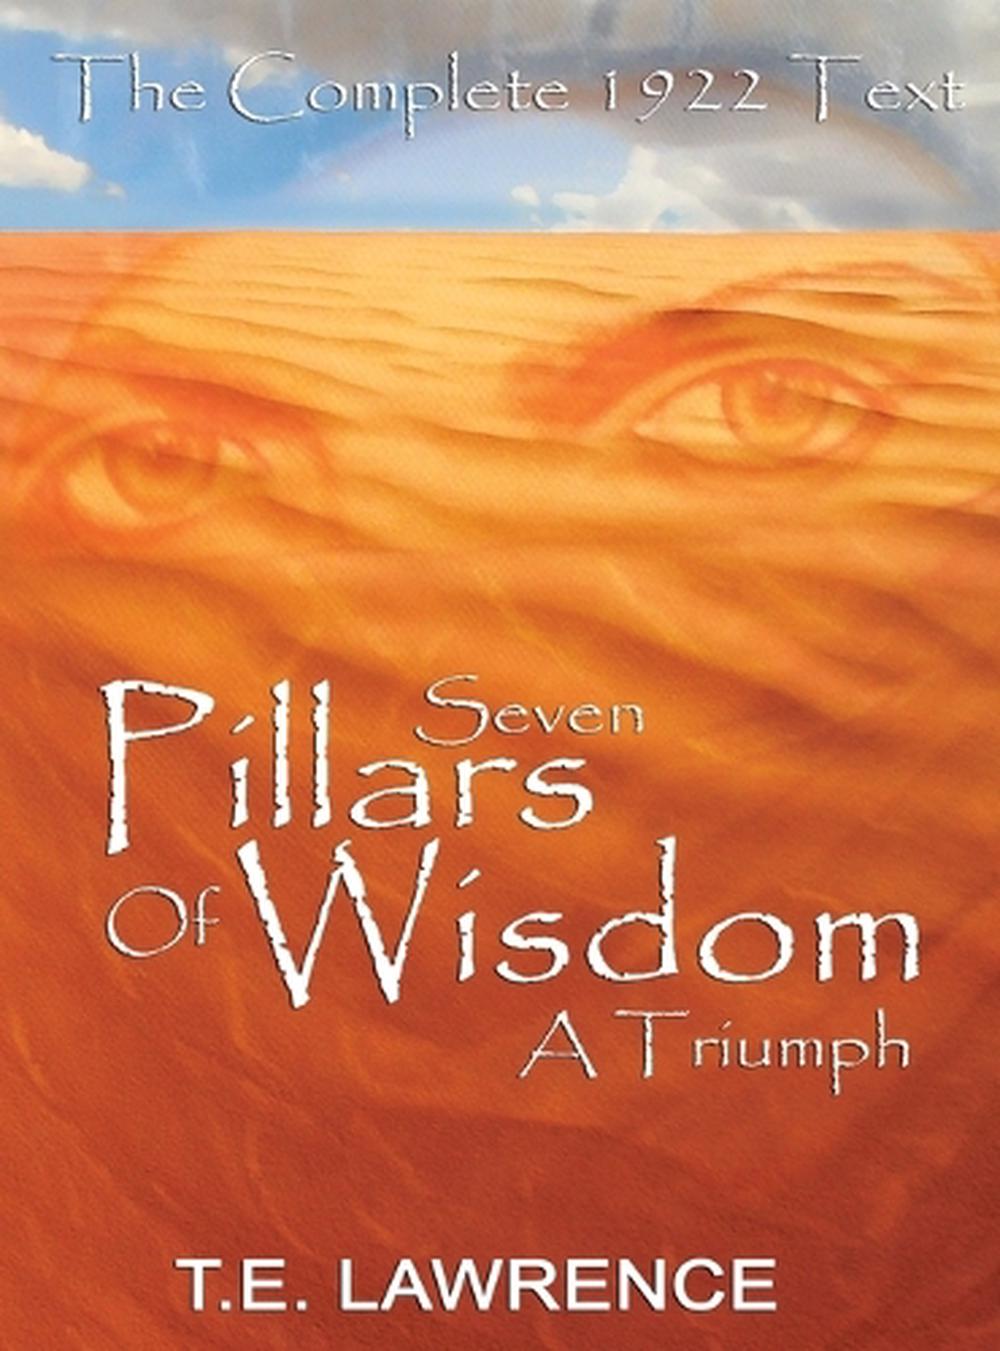 seven pillars of wisdom book